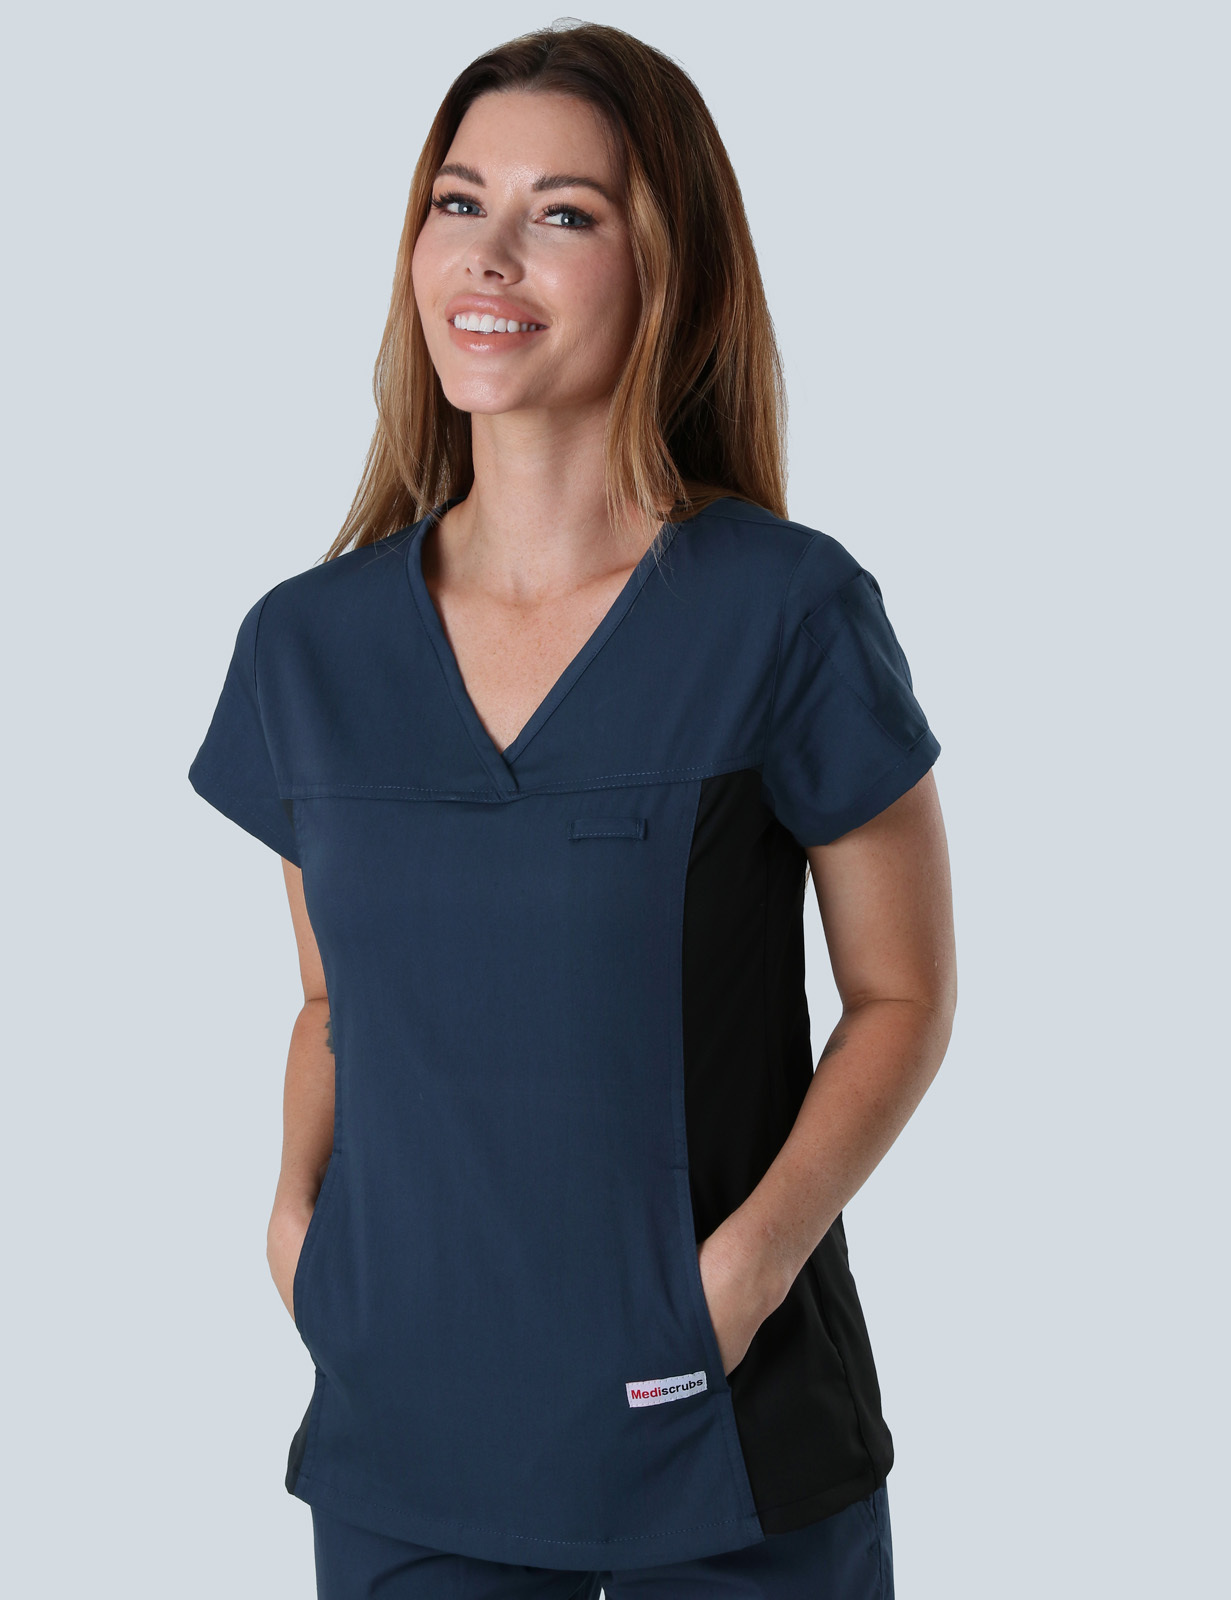 Newborn Nurse Practitioner Uniform Set Bundle (Women's Fit Spandex Top and Cargo Pants in Navy + Logo)